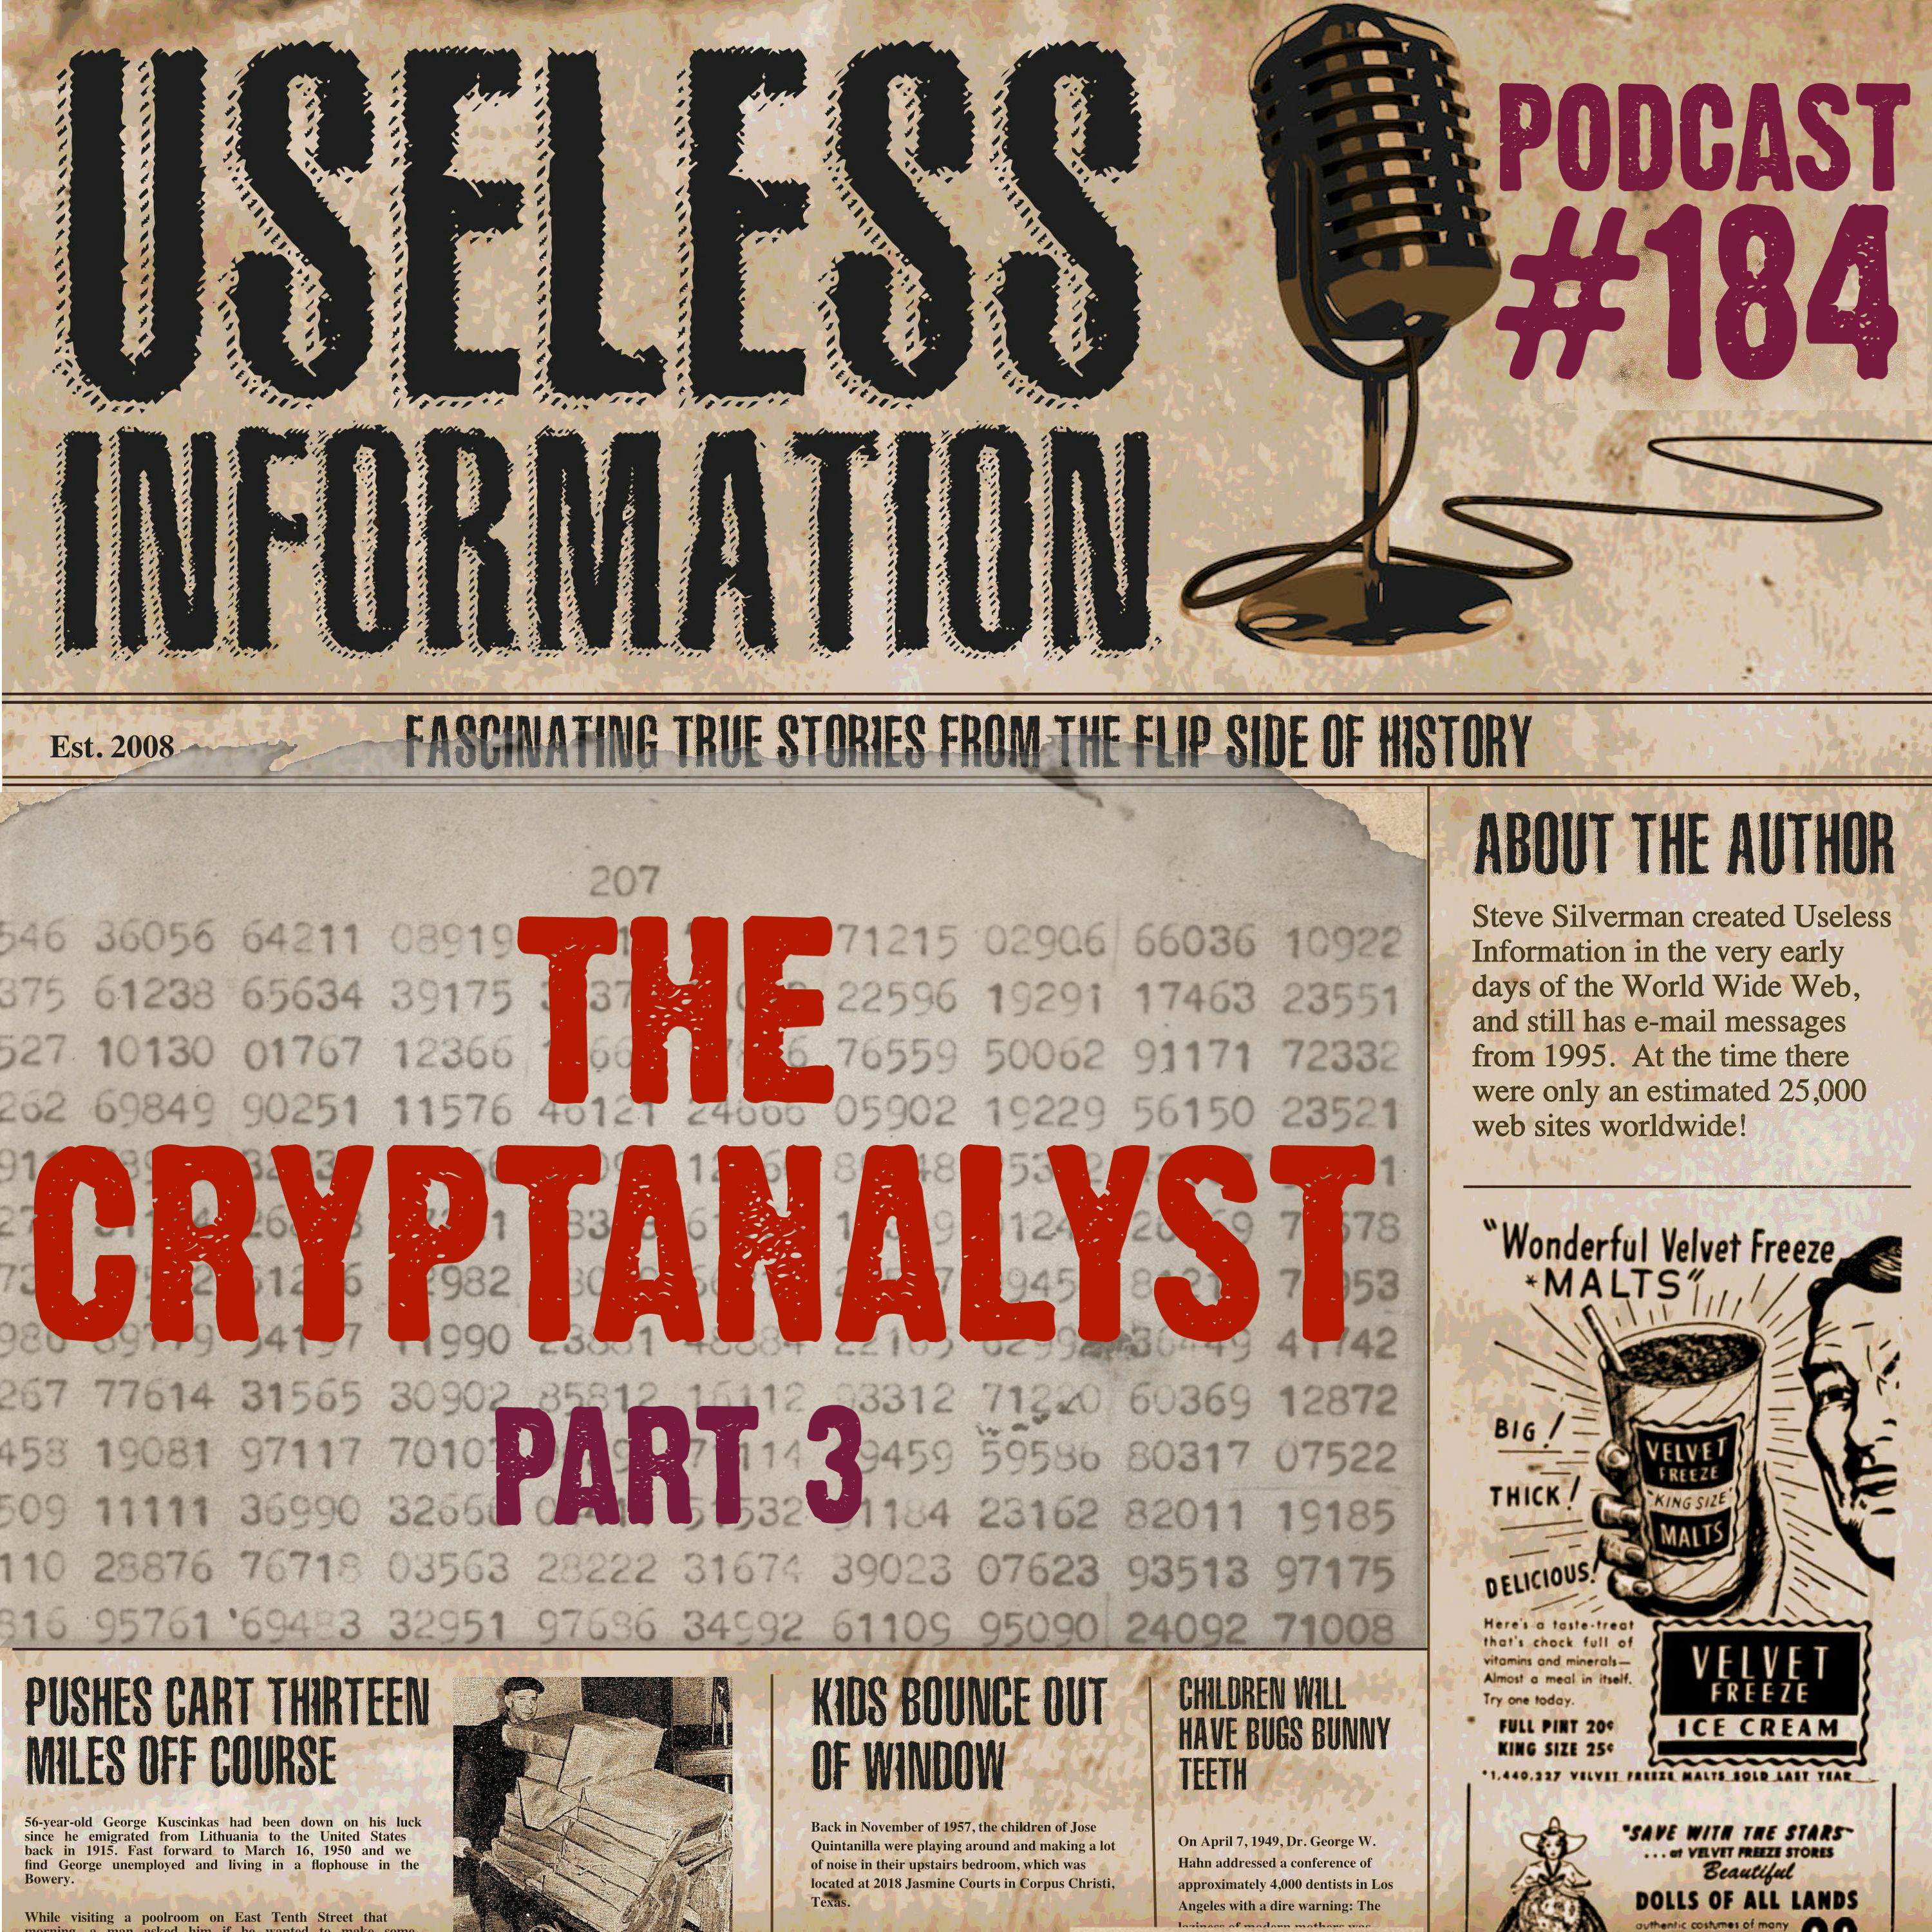 The Cryptanalyst (Part 3) - UI Podcast #184